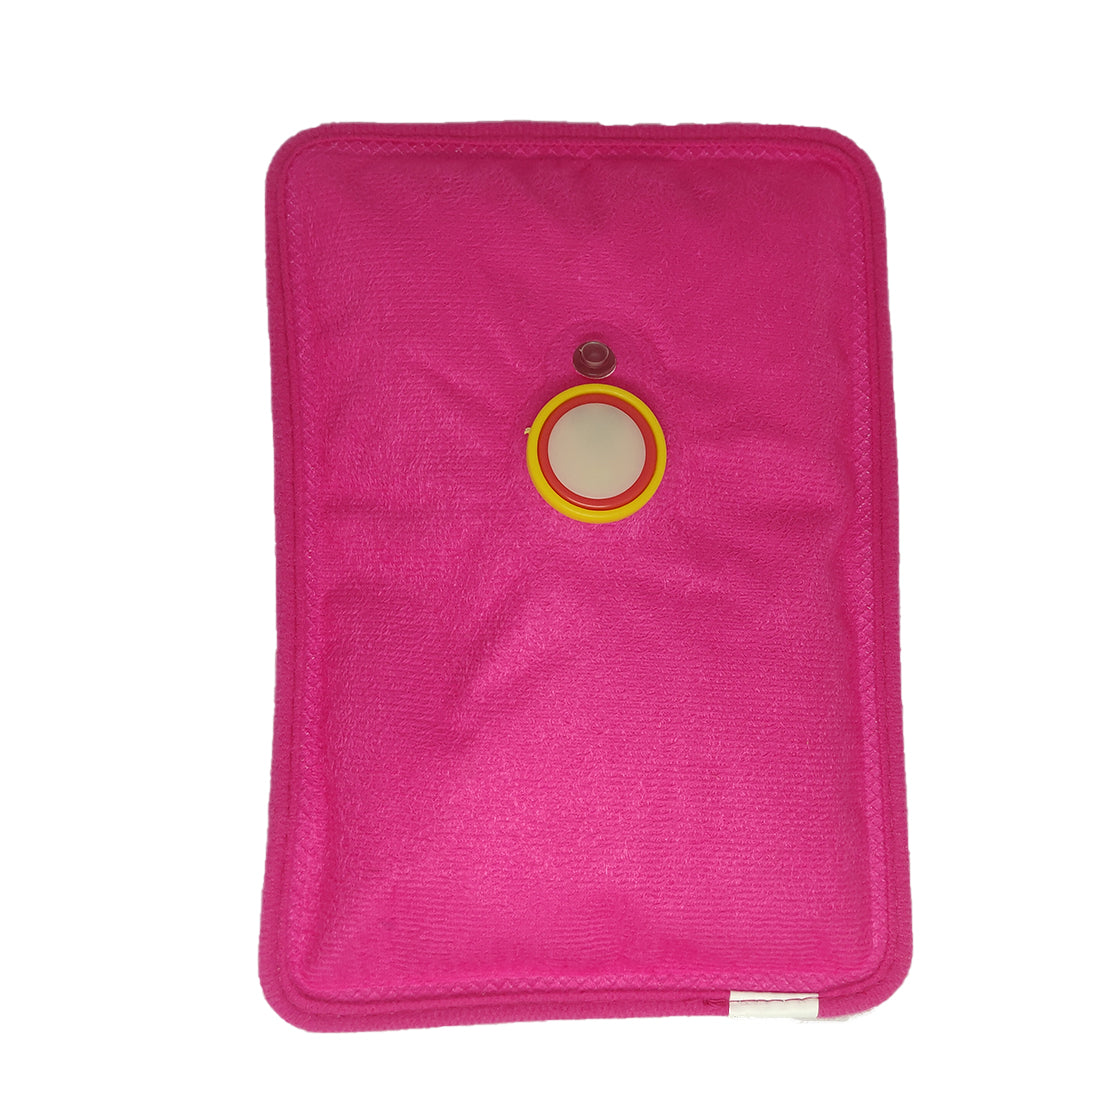 Buy Ortho Heating Gel Bag | Samson Products | Medtree.co.in